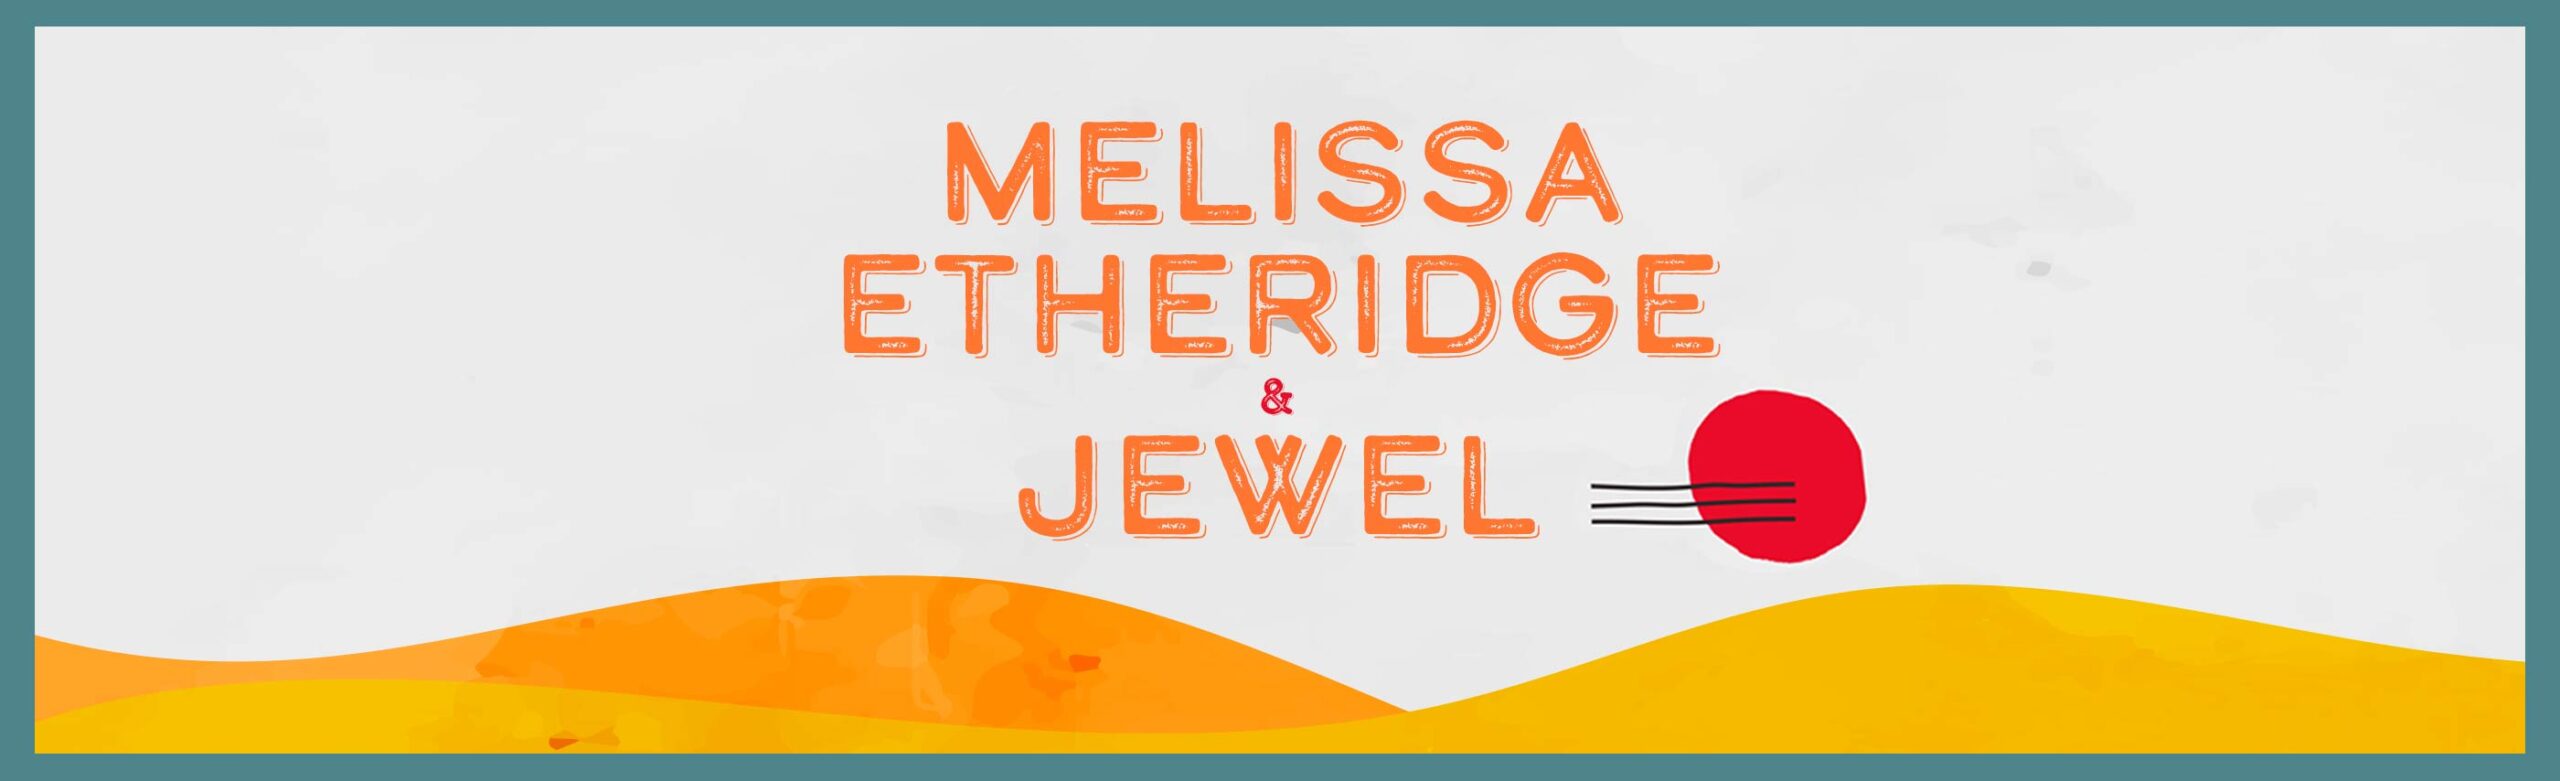 Melissa Etheridge & Jewel to Co-headline Concert at KettleHouse Amphitheater Image